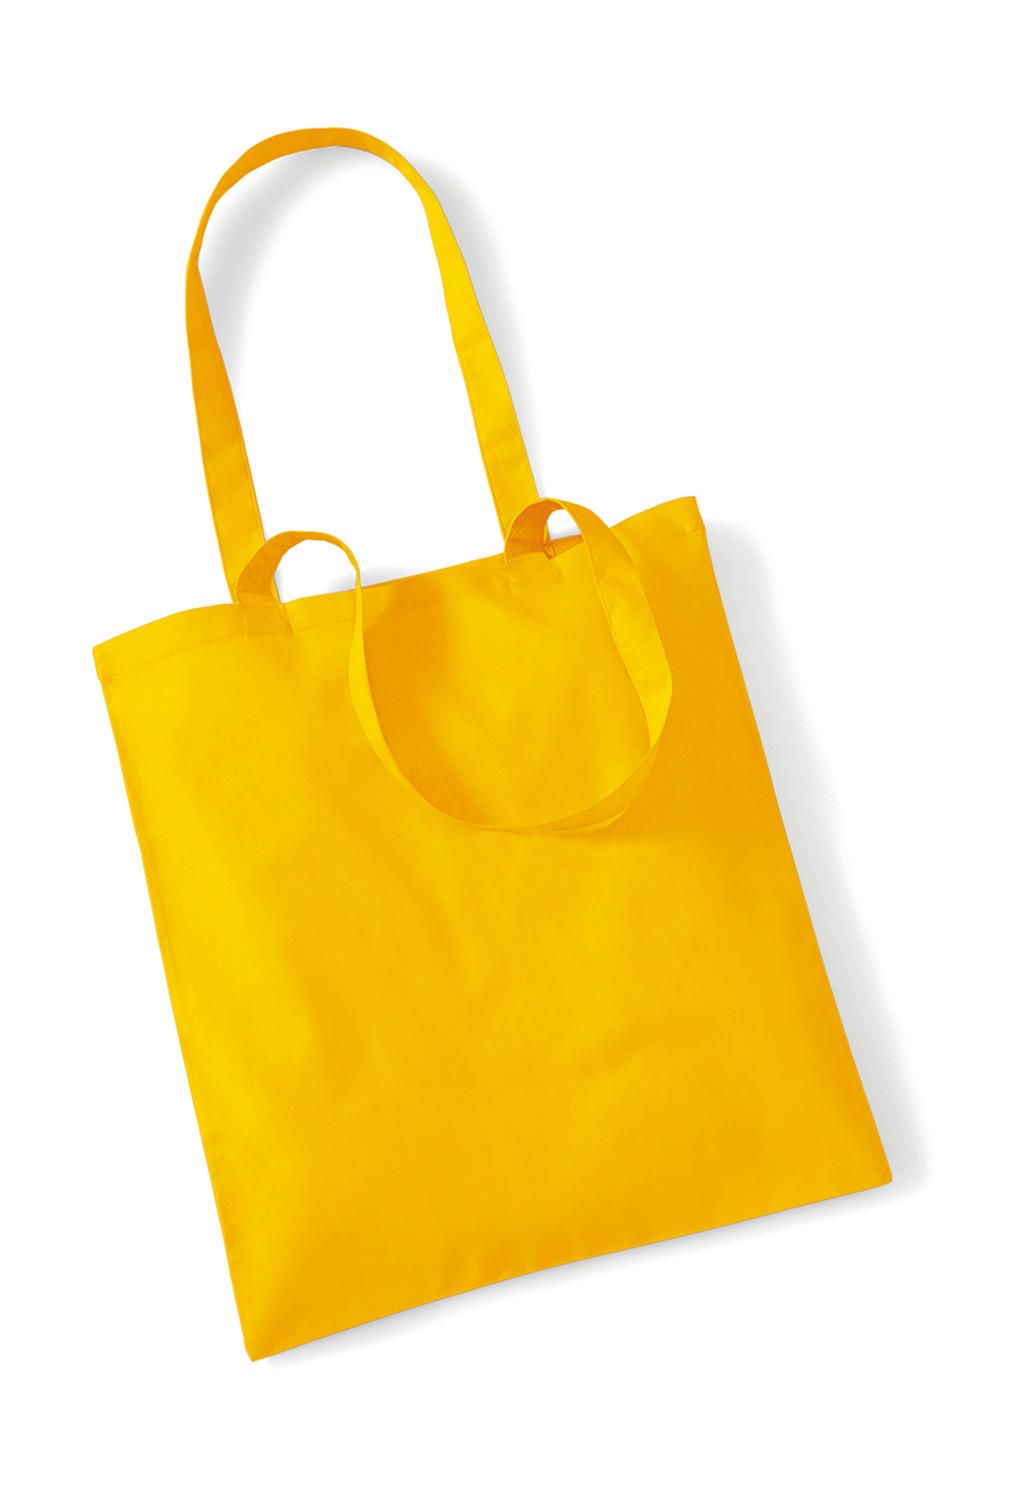  Bag for Life - Long Handles in Farbe Sunflower